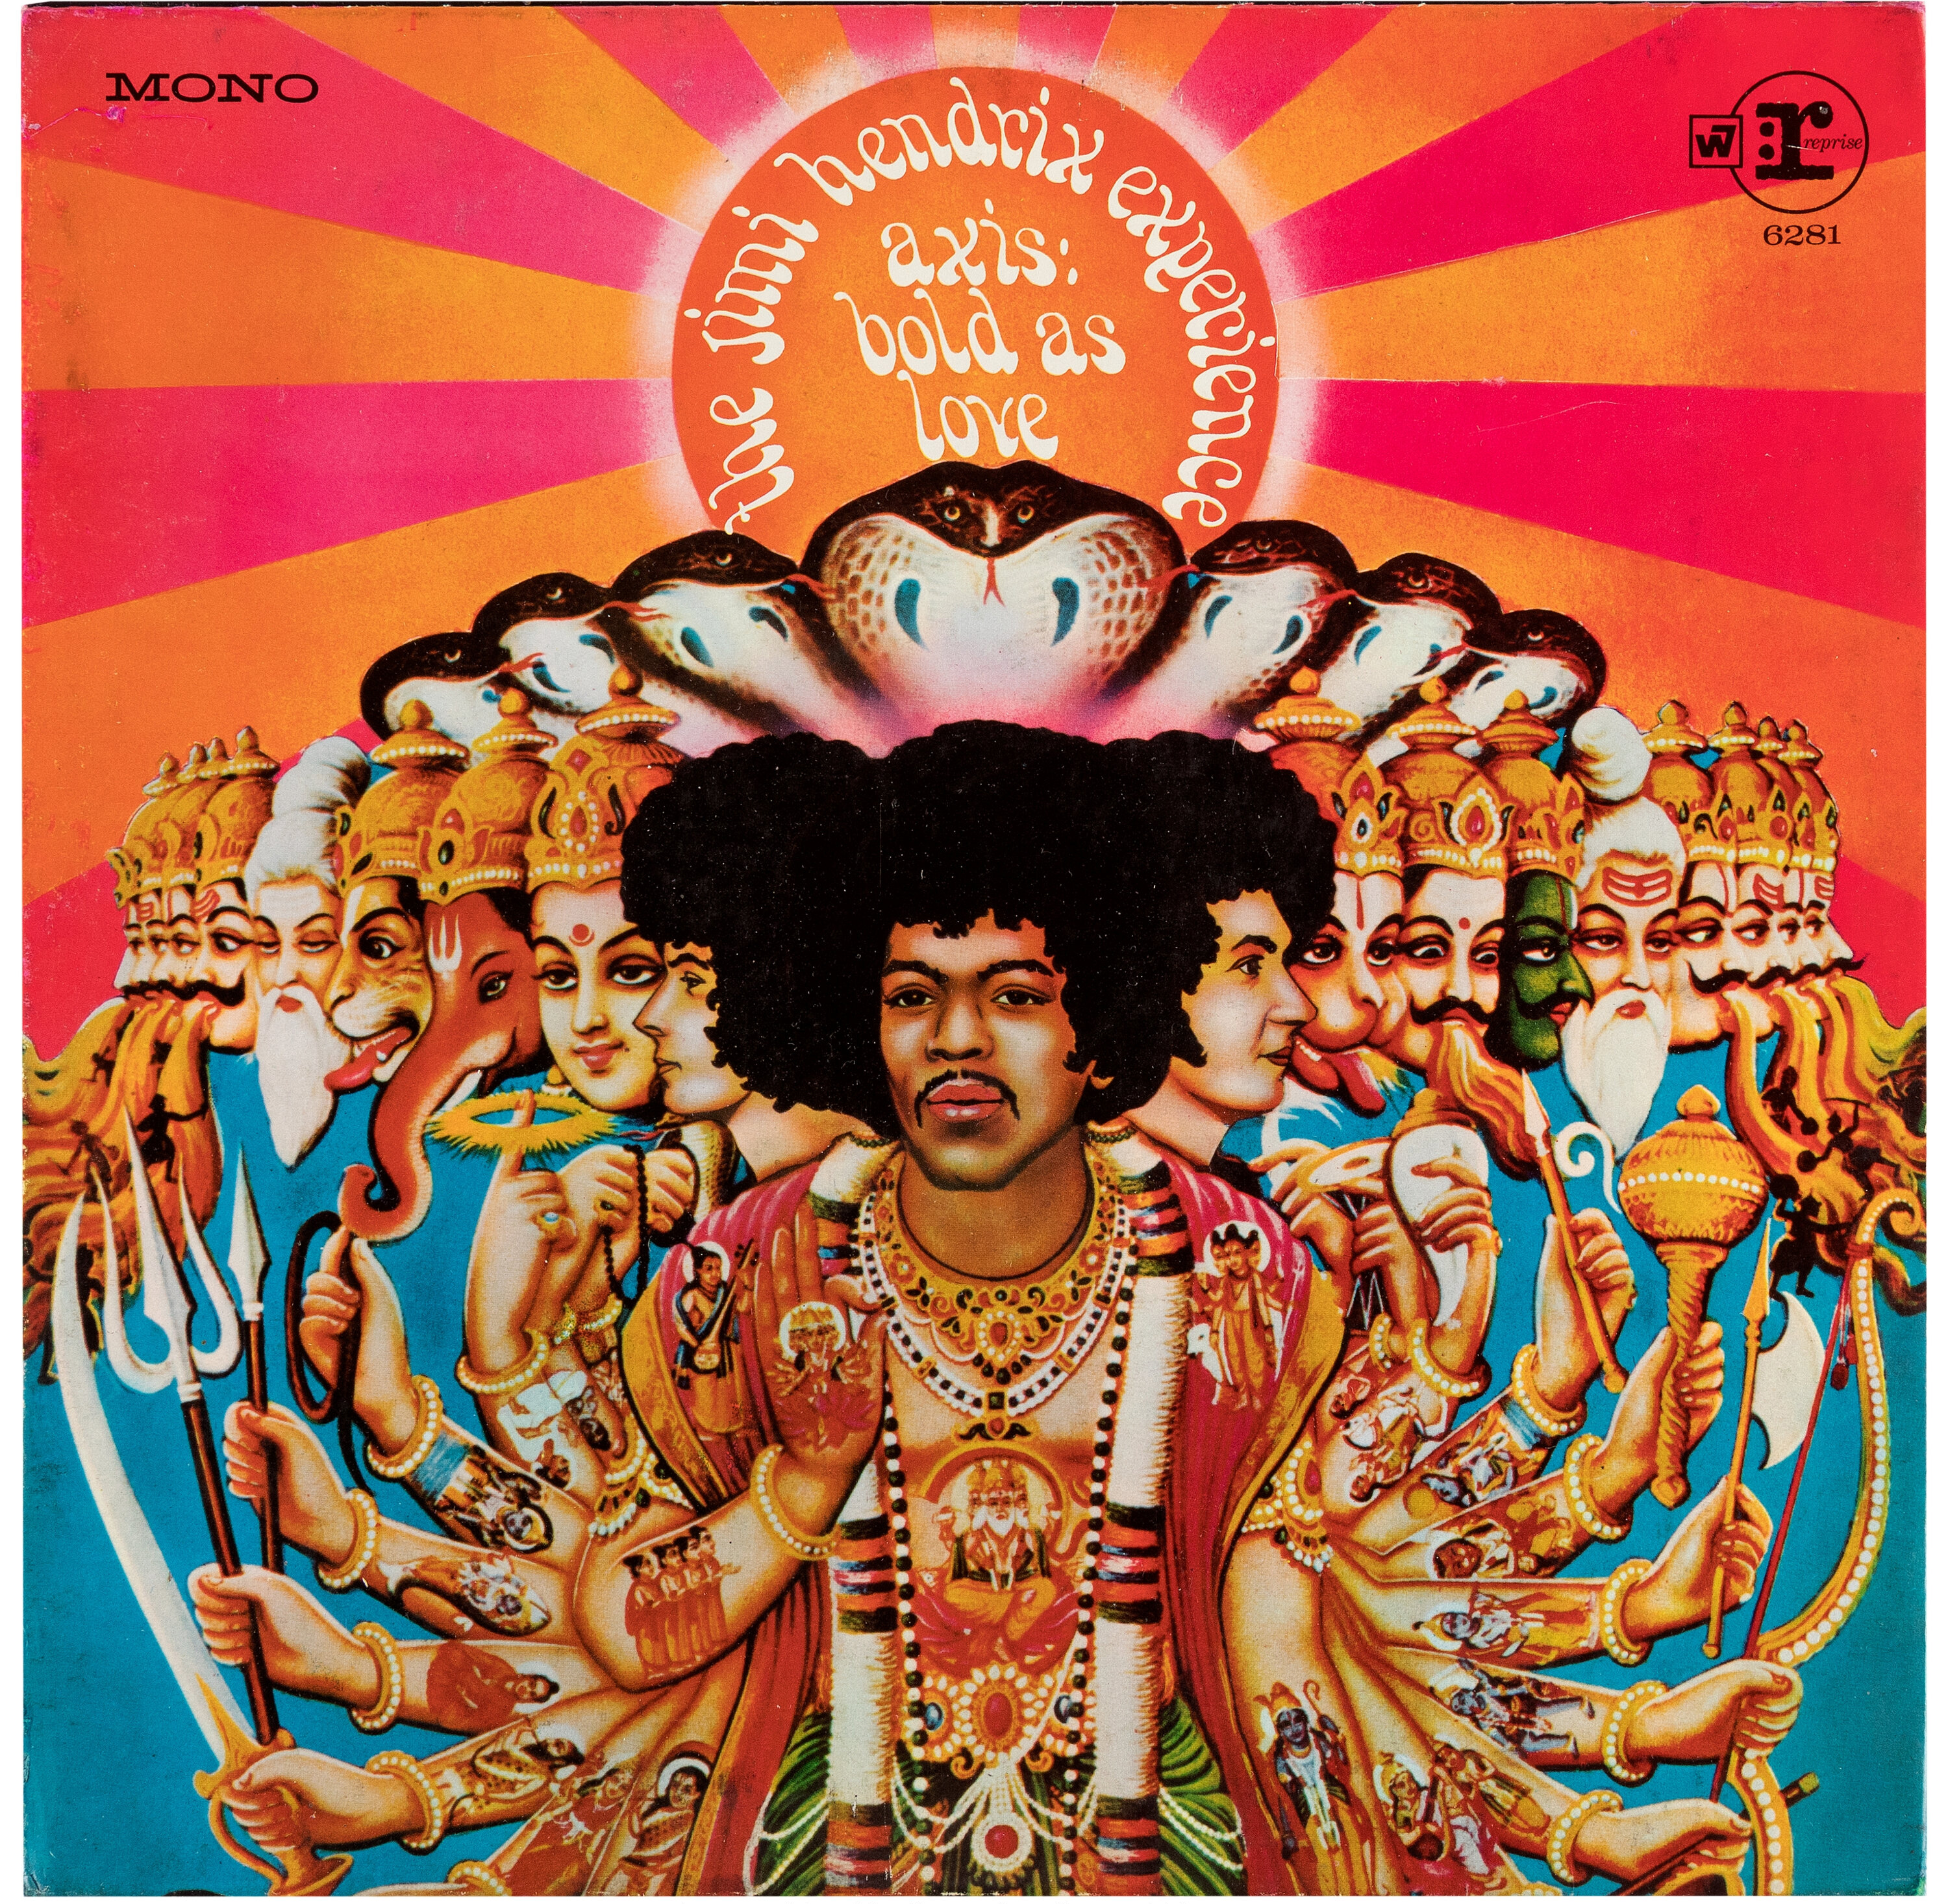 Jimi Hendrix Axis Bold as Love Album